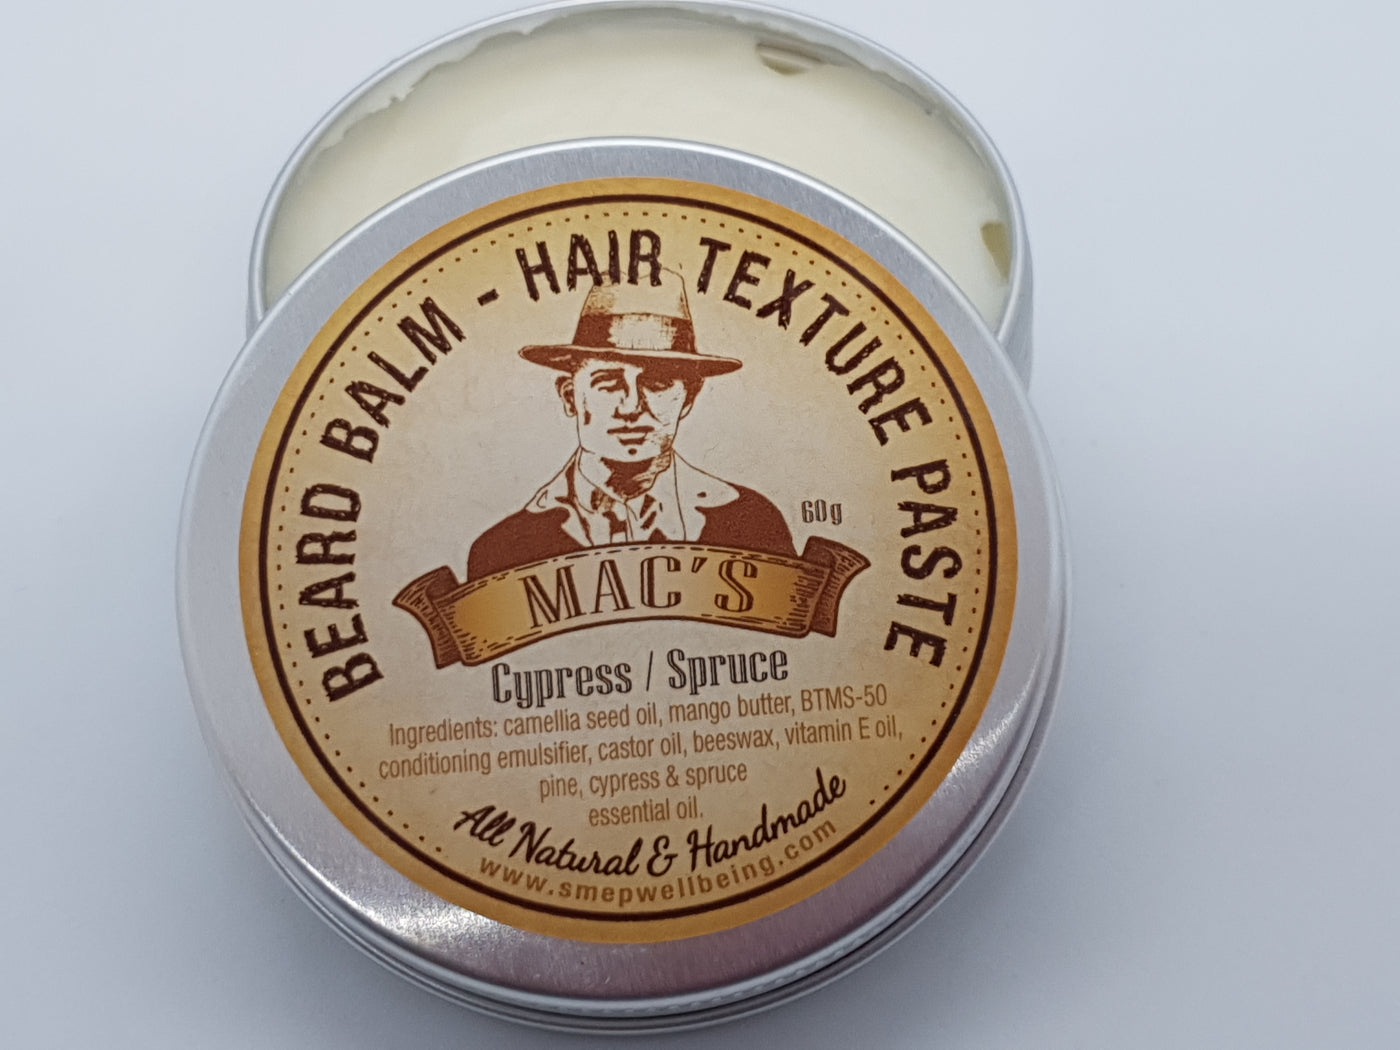 Cedarwood Beard Balm and Hair Texture Paste